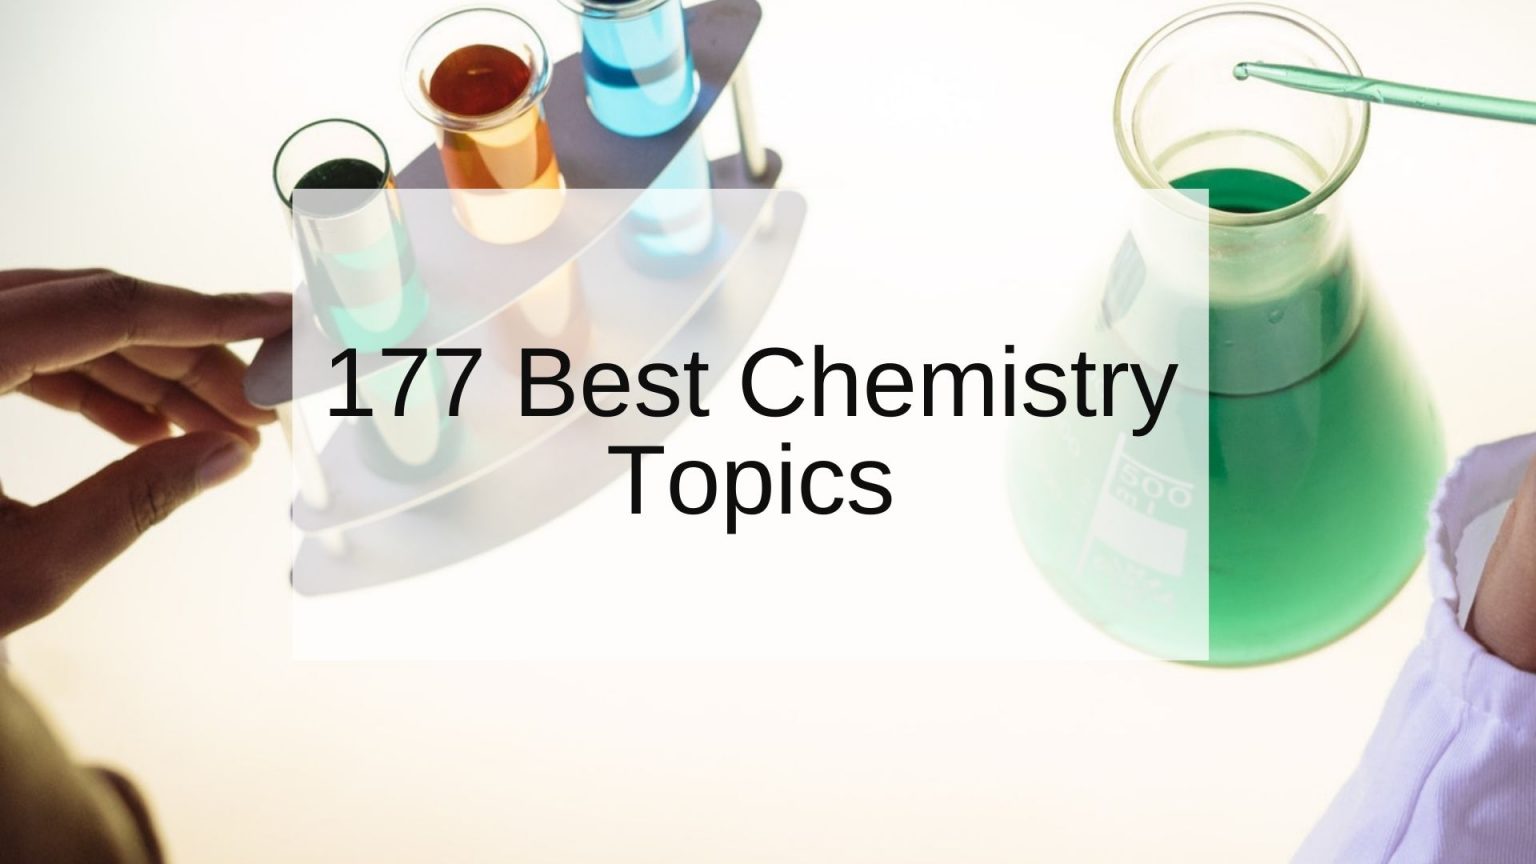 research paper topics in inorganic chemistry